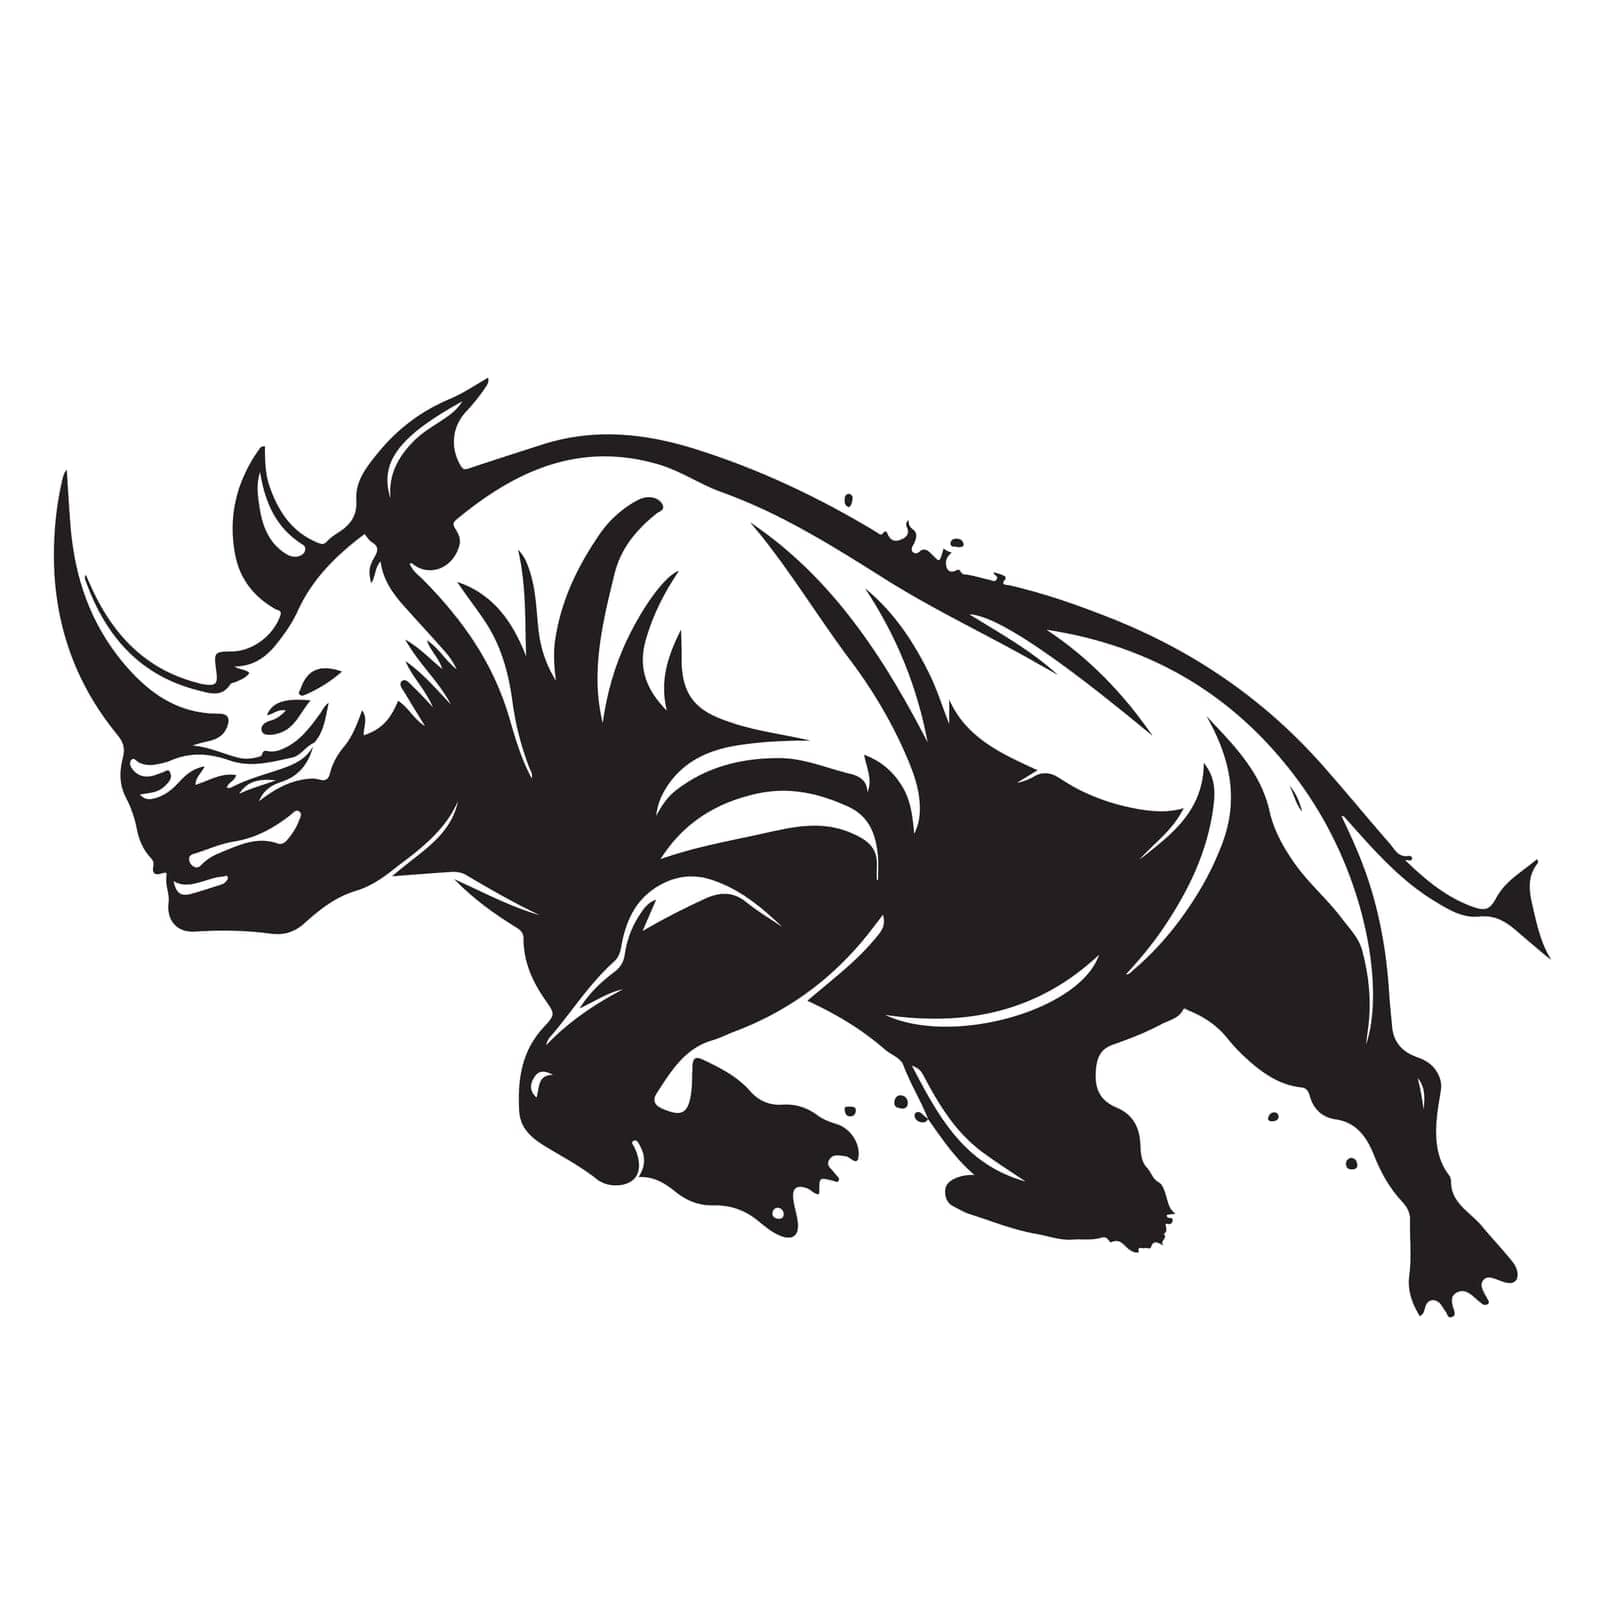 Rhino logo template. Endangered African Rhinoceros silhouette icon. Horned animal symbol. Vector illustration